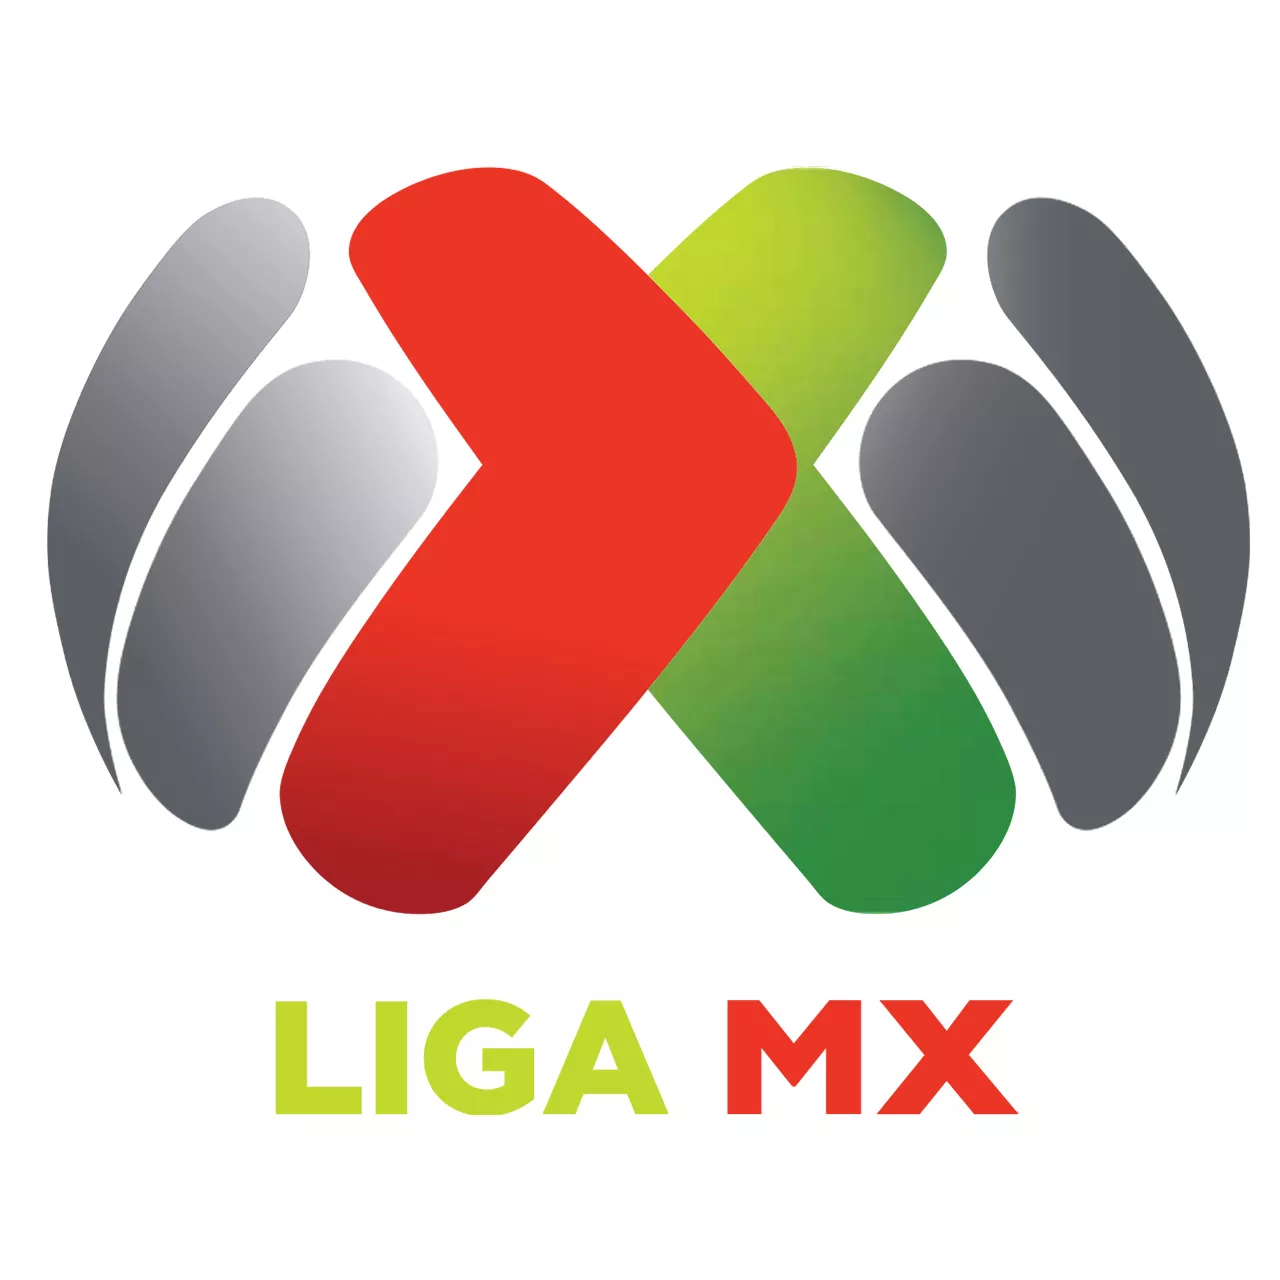 Liga MX - bestfootballkits